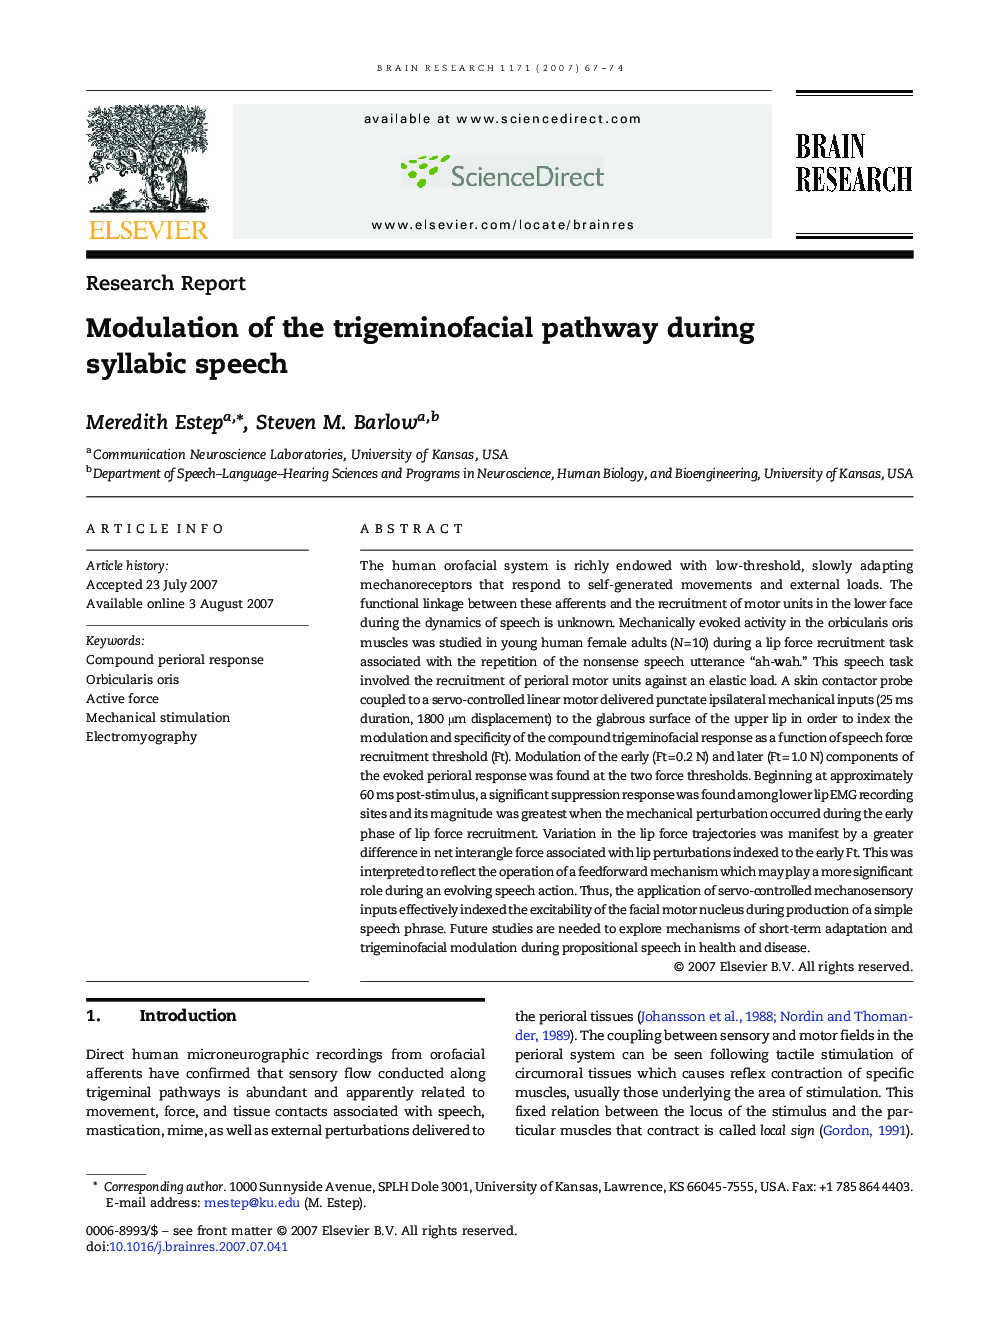 Modulation of the trigeminofacial pathway during syllabic speech